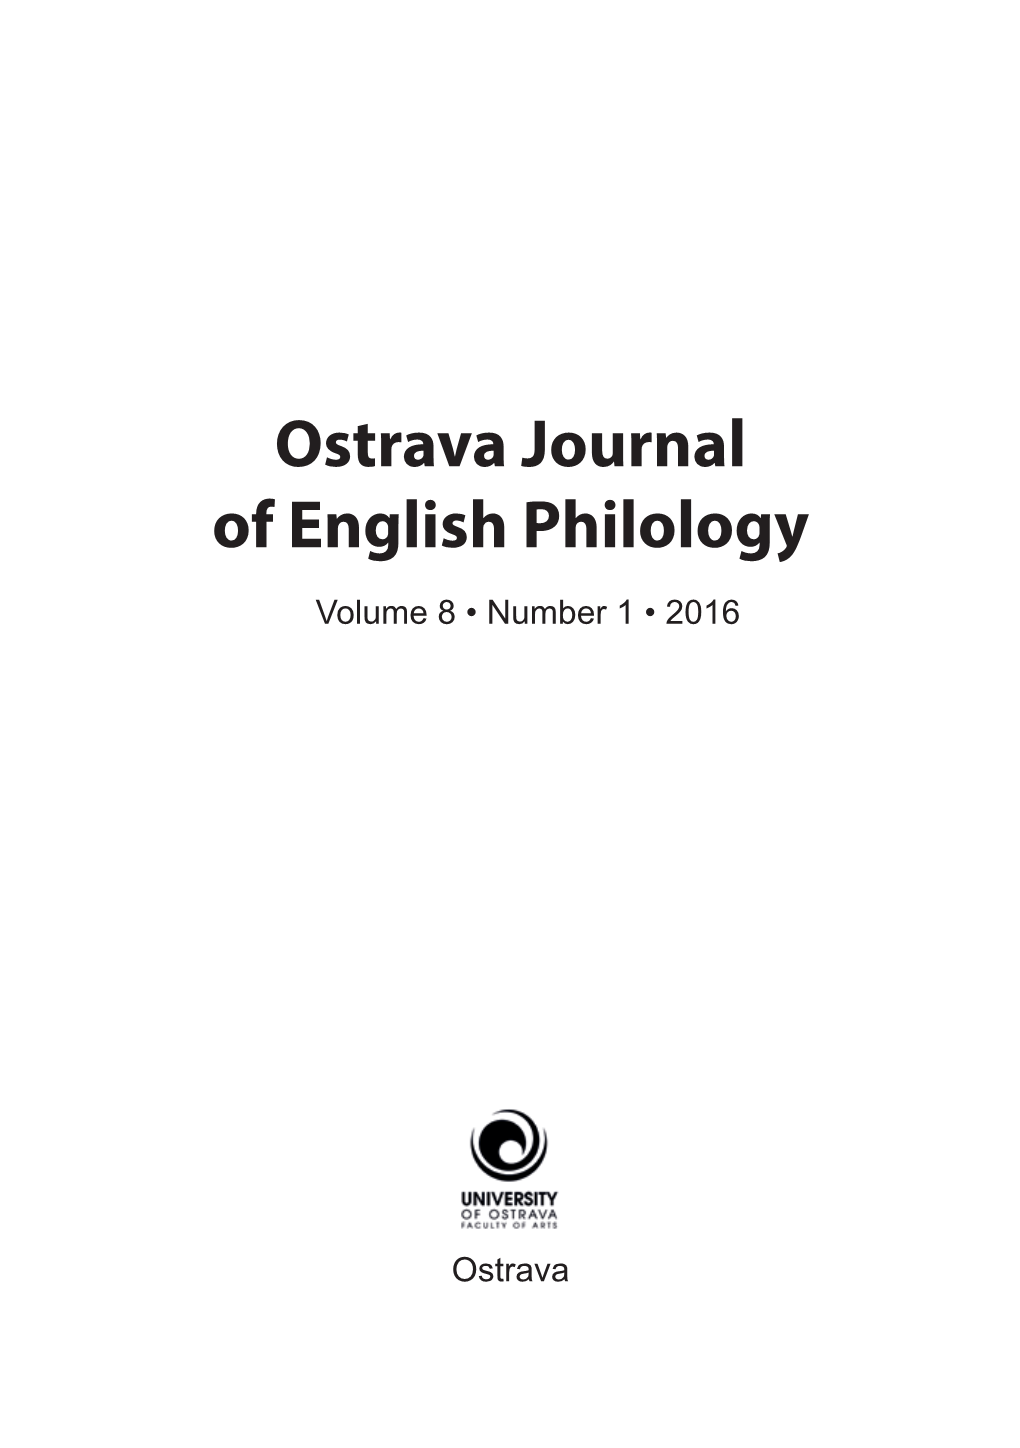 Ostrava Journal of English Philology